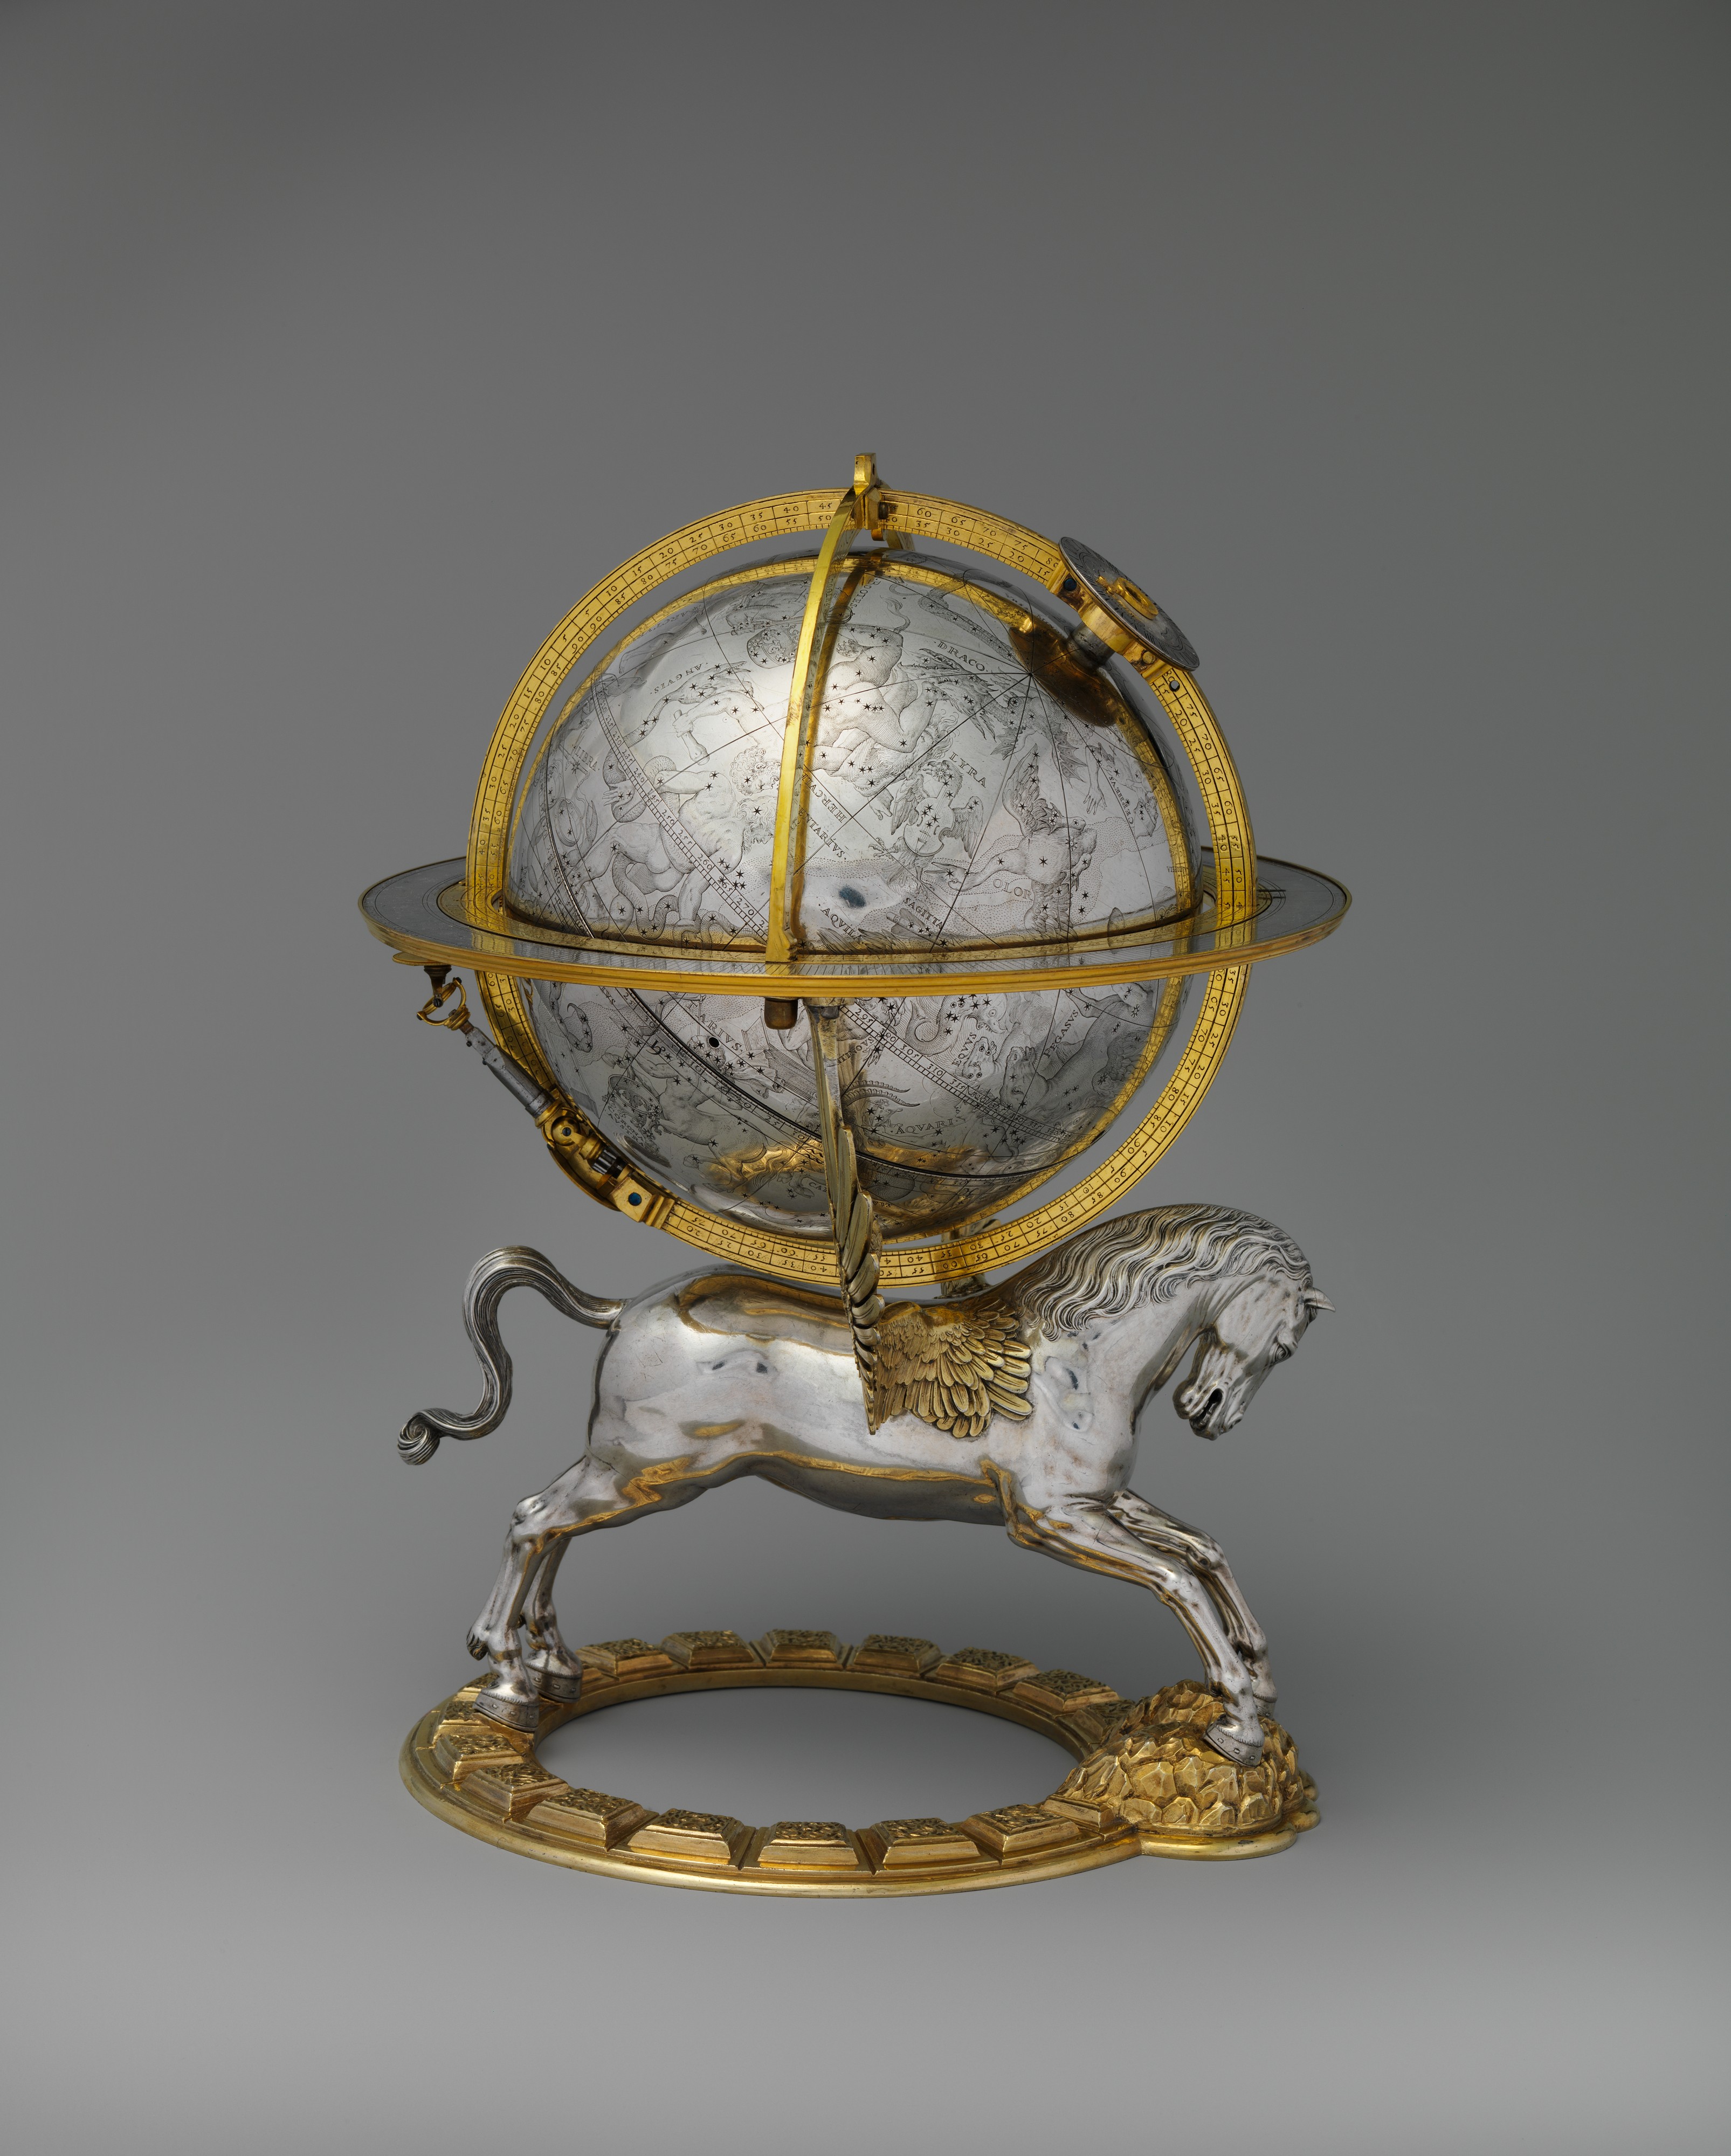 Gerhard Emmoser | Celestial globe with clockwork | Austrian 